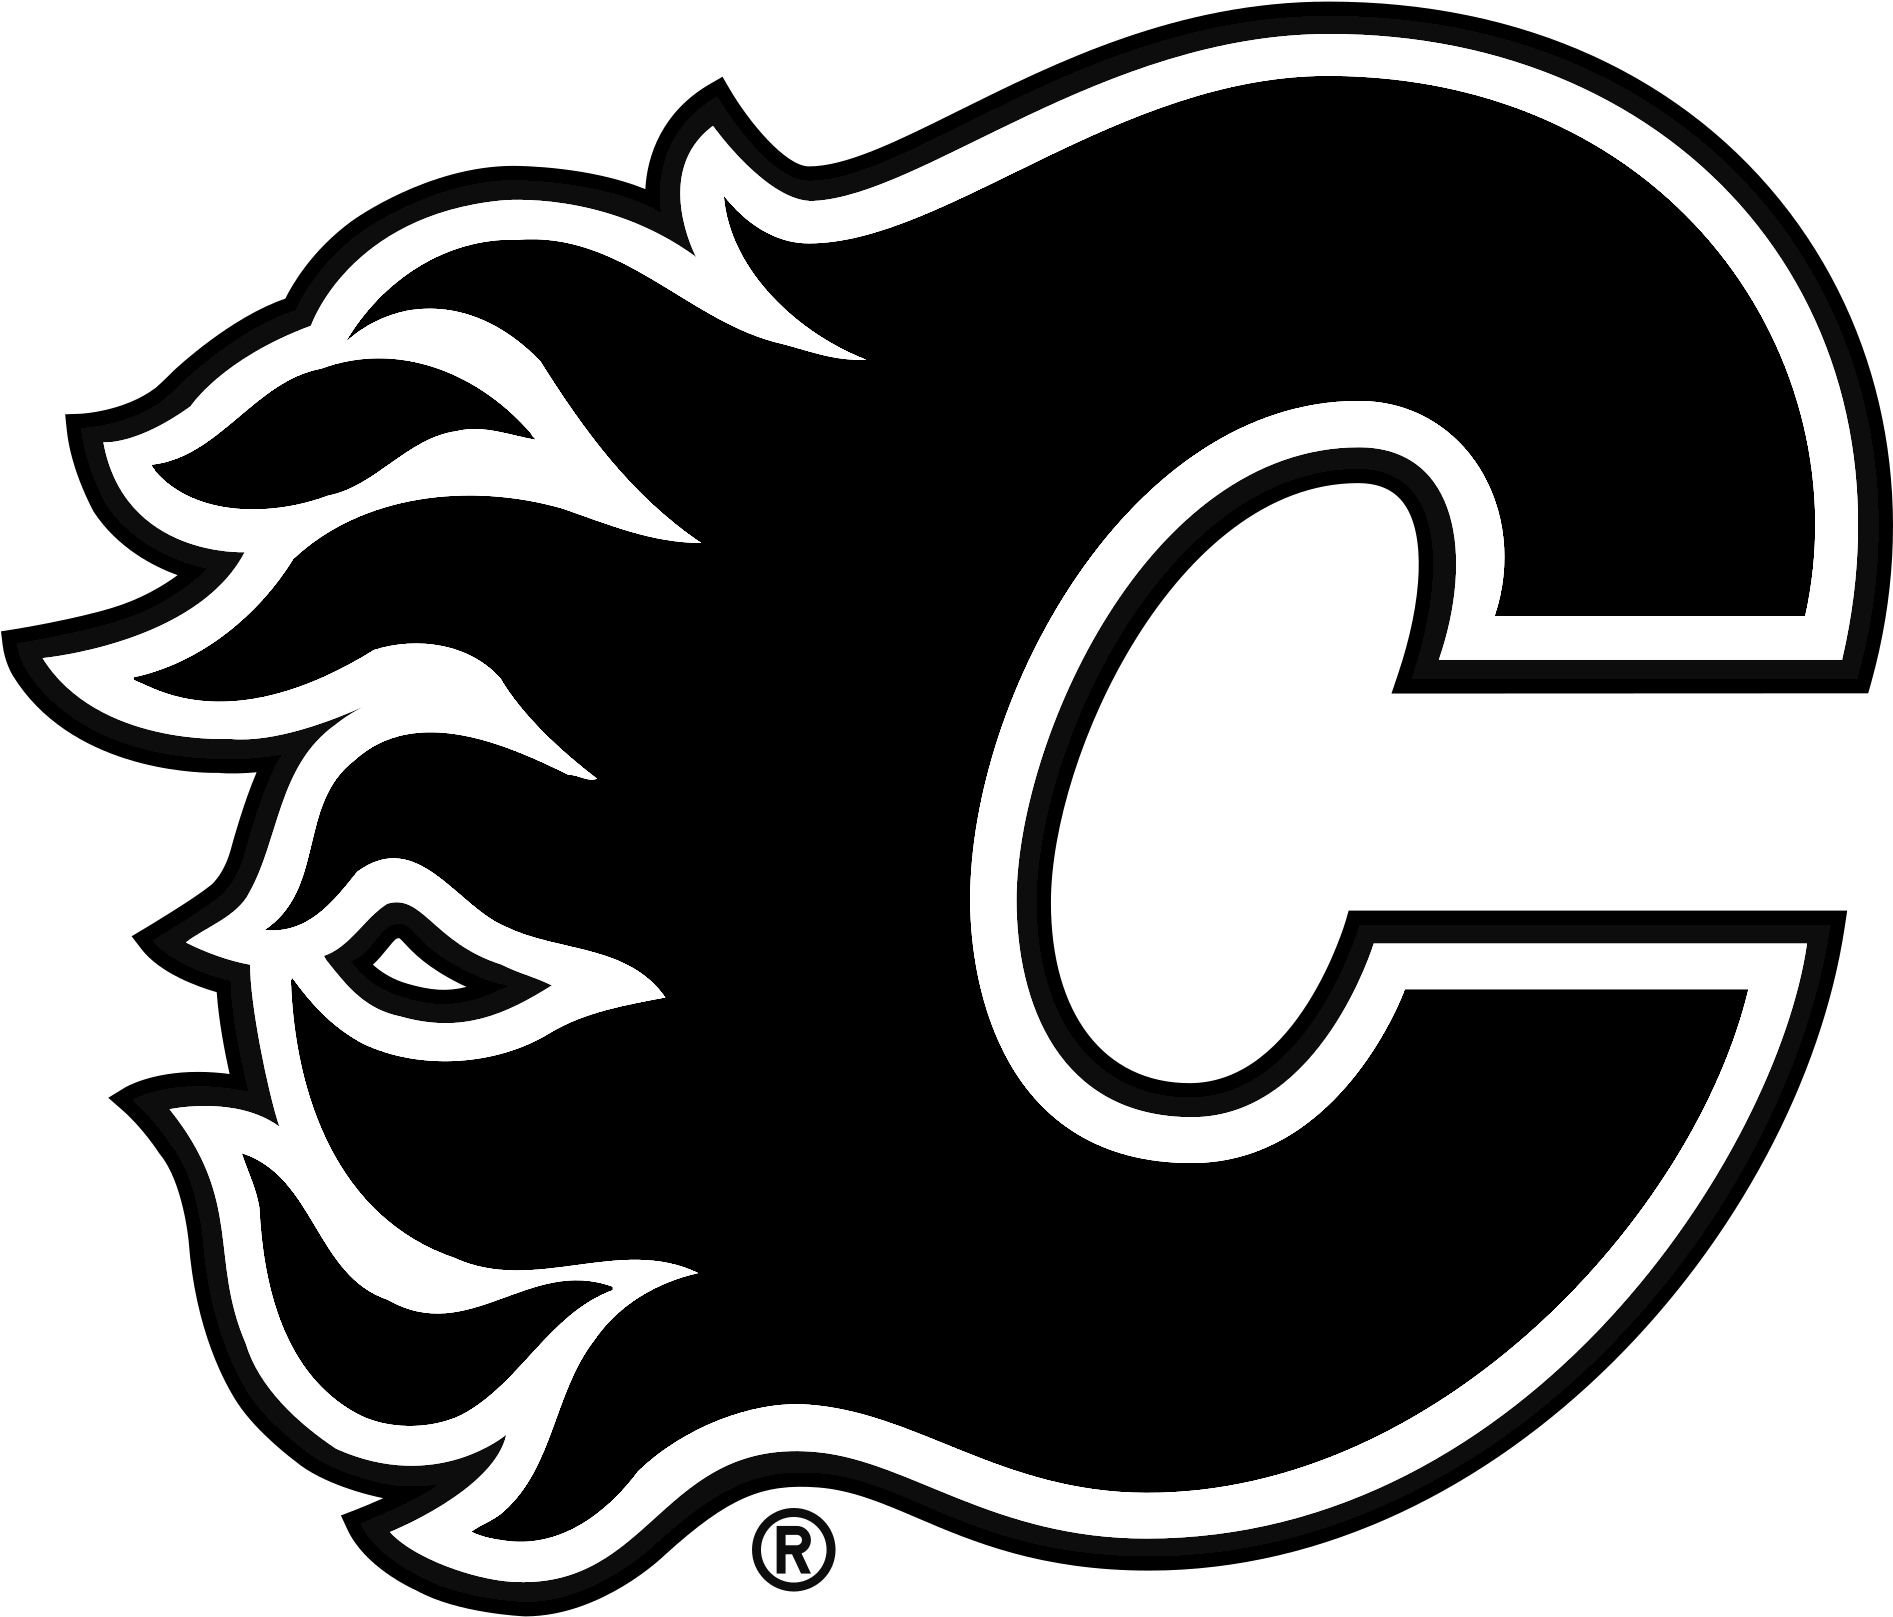 Calgary Flames Logo Black And White - Calgary Flames Decal Clipart ...